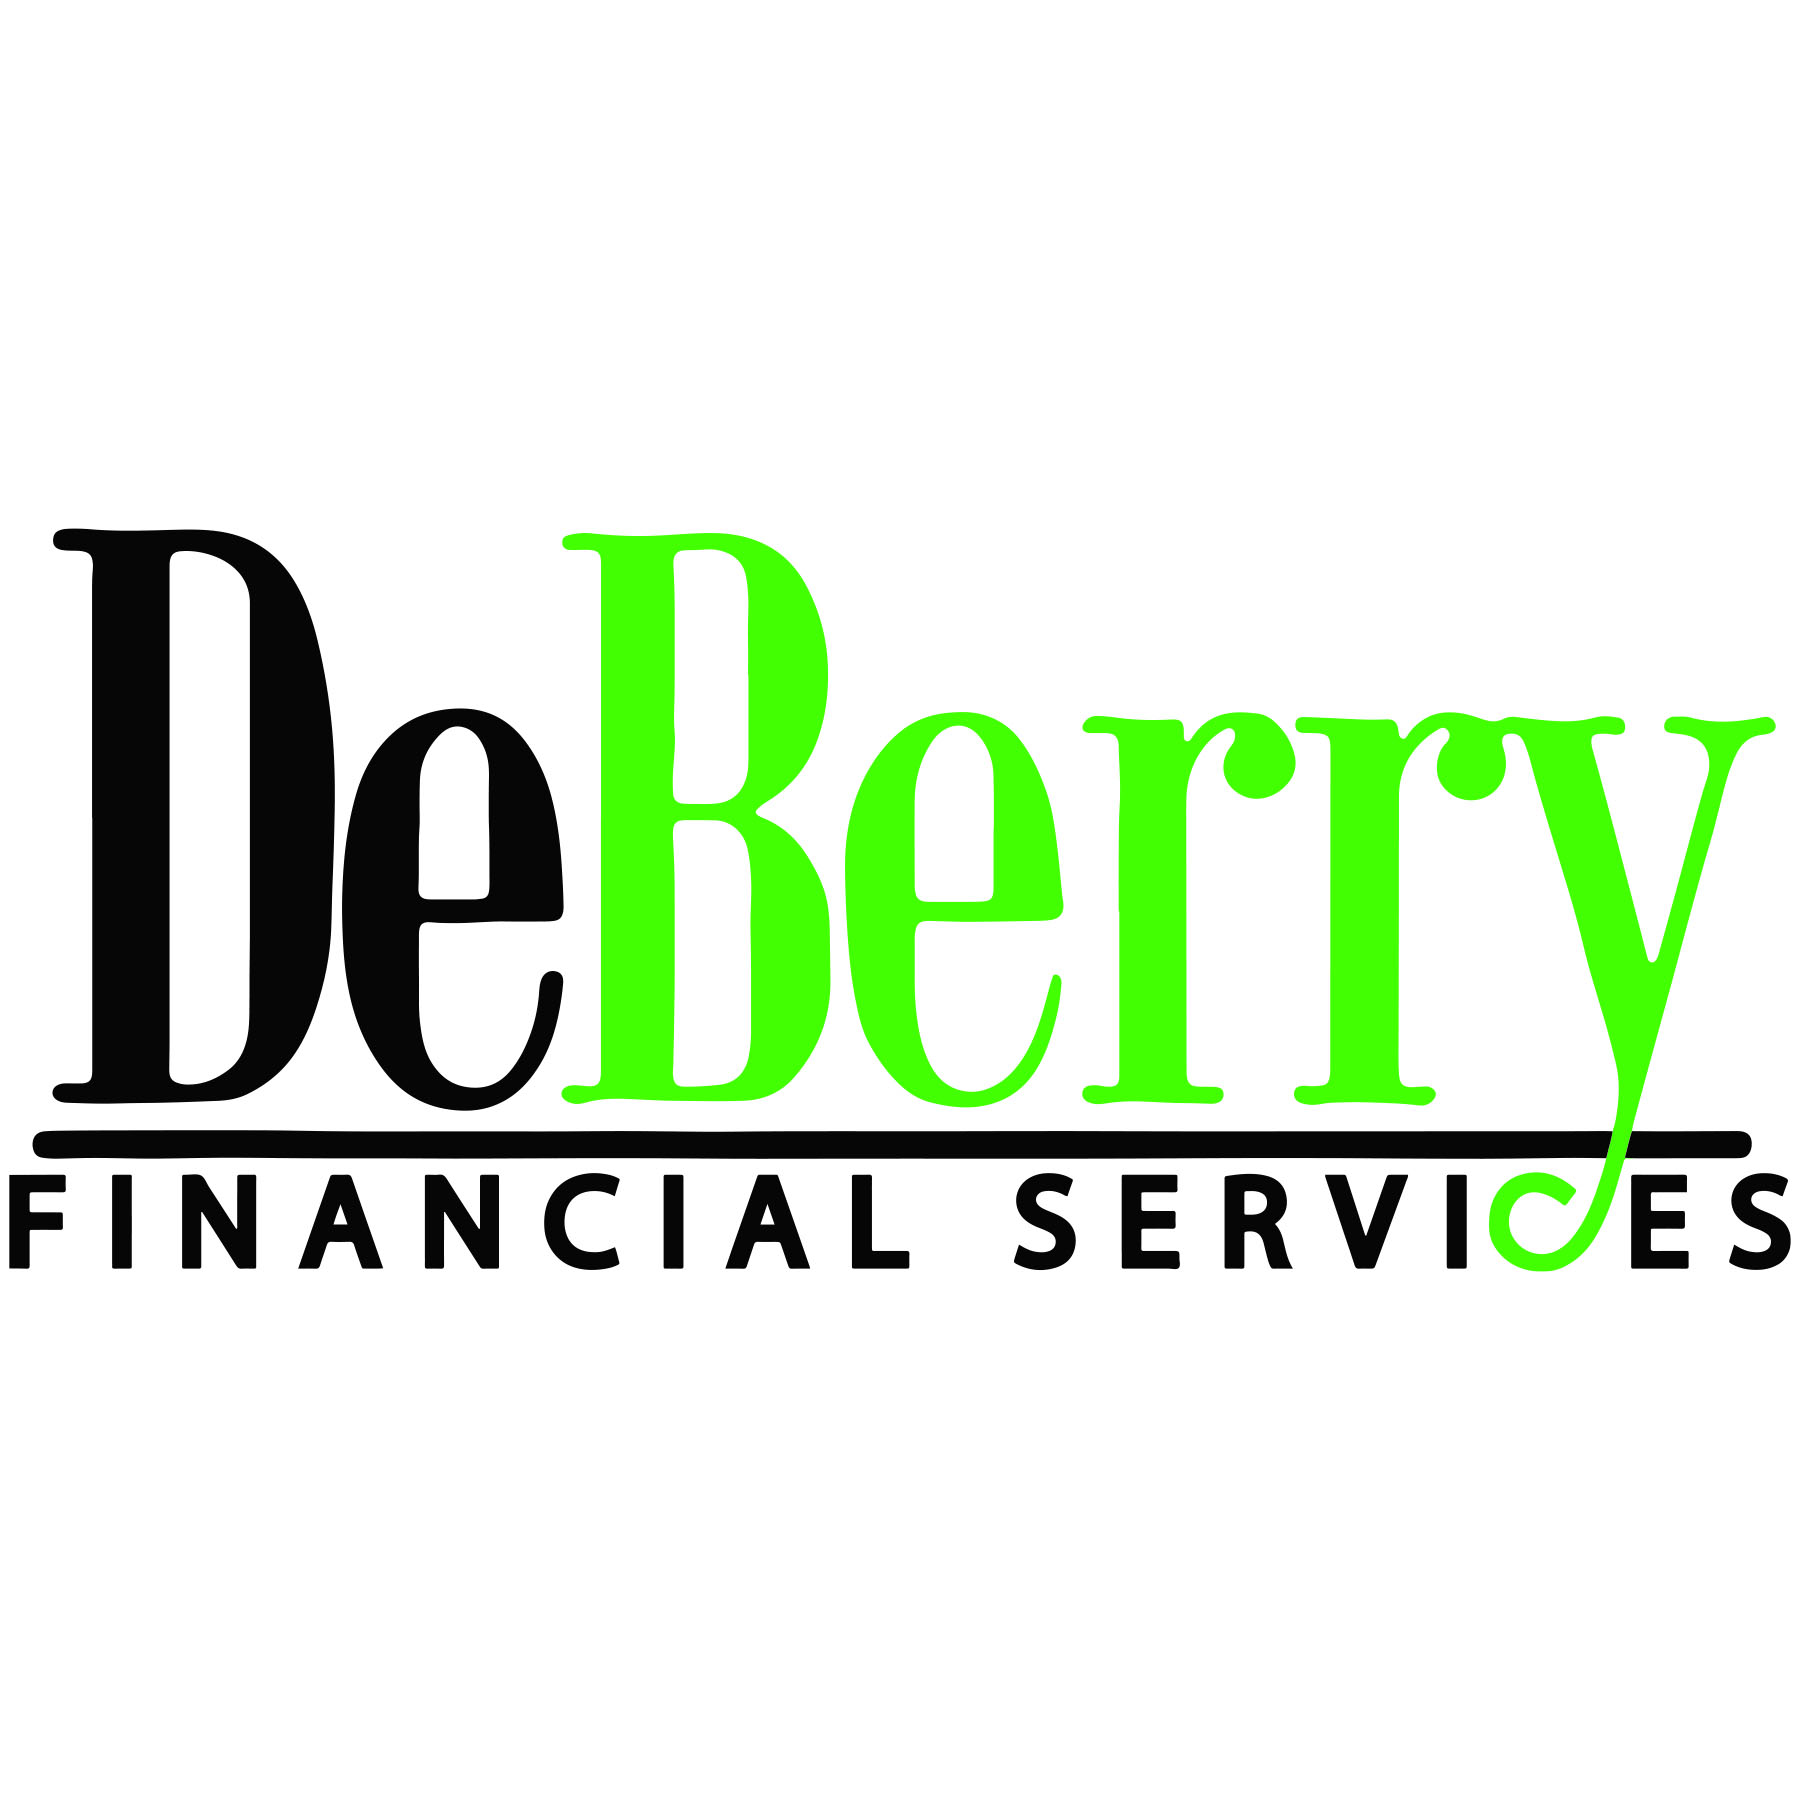 DeBerry Financial Services, LLC